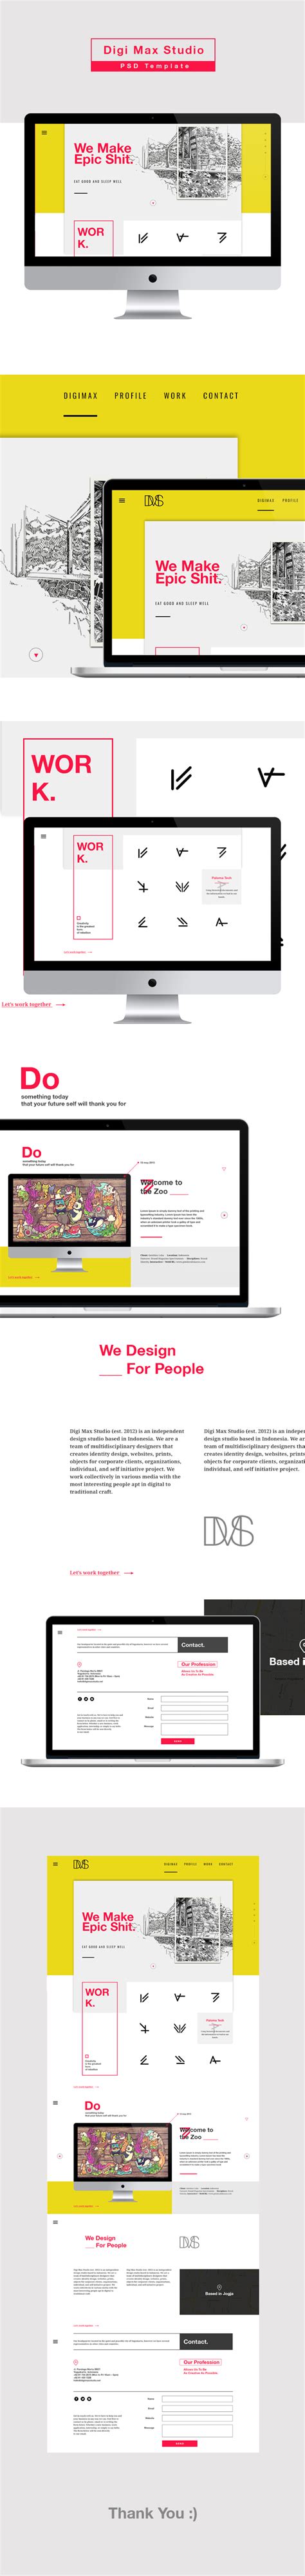 Digi Max工作室网页设计_设计师原创作品_设区网